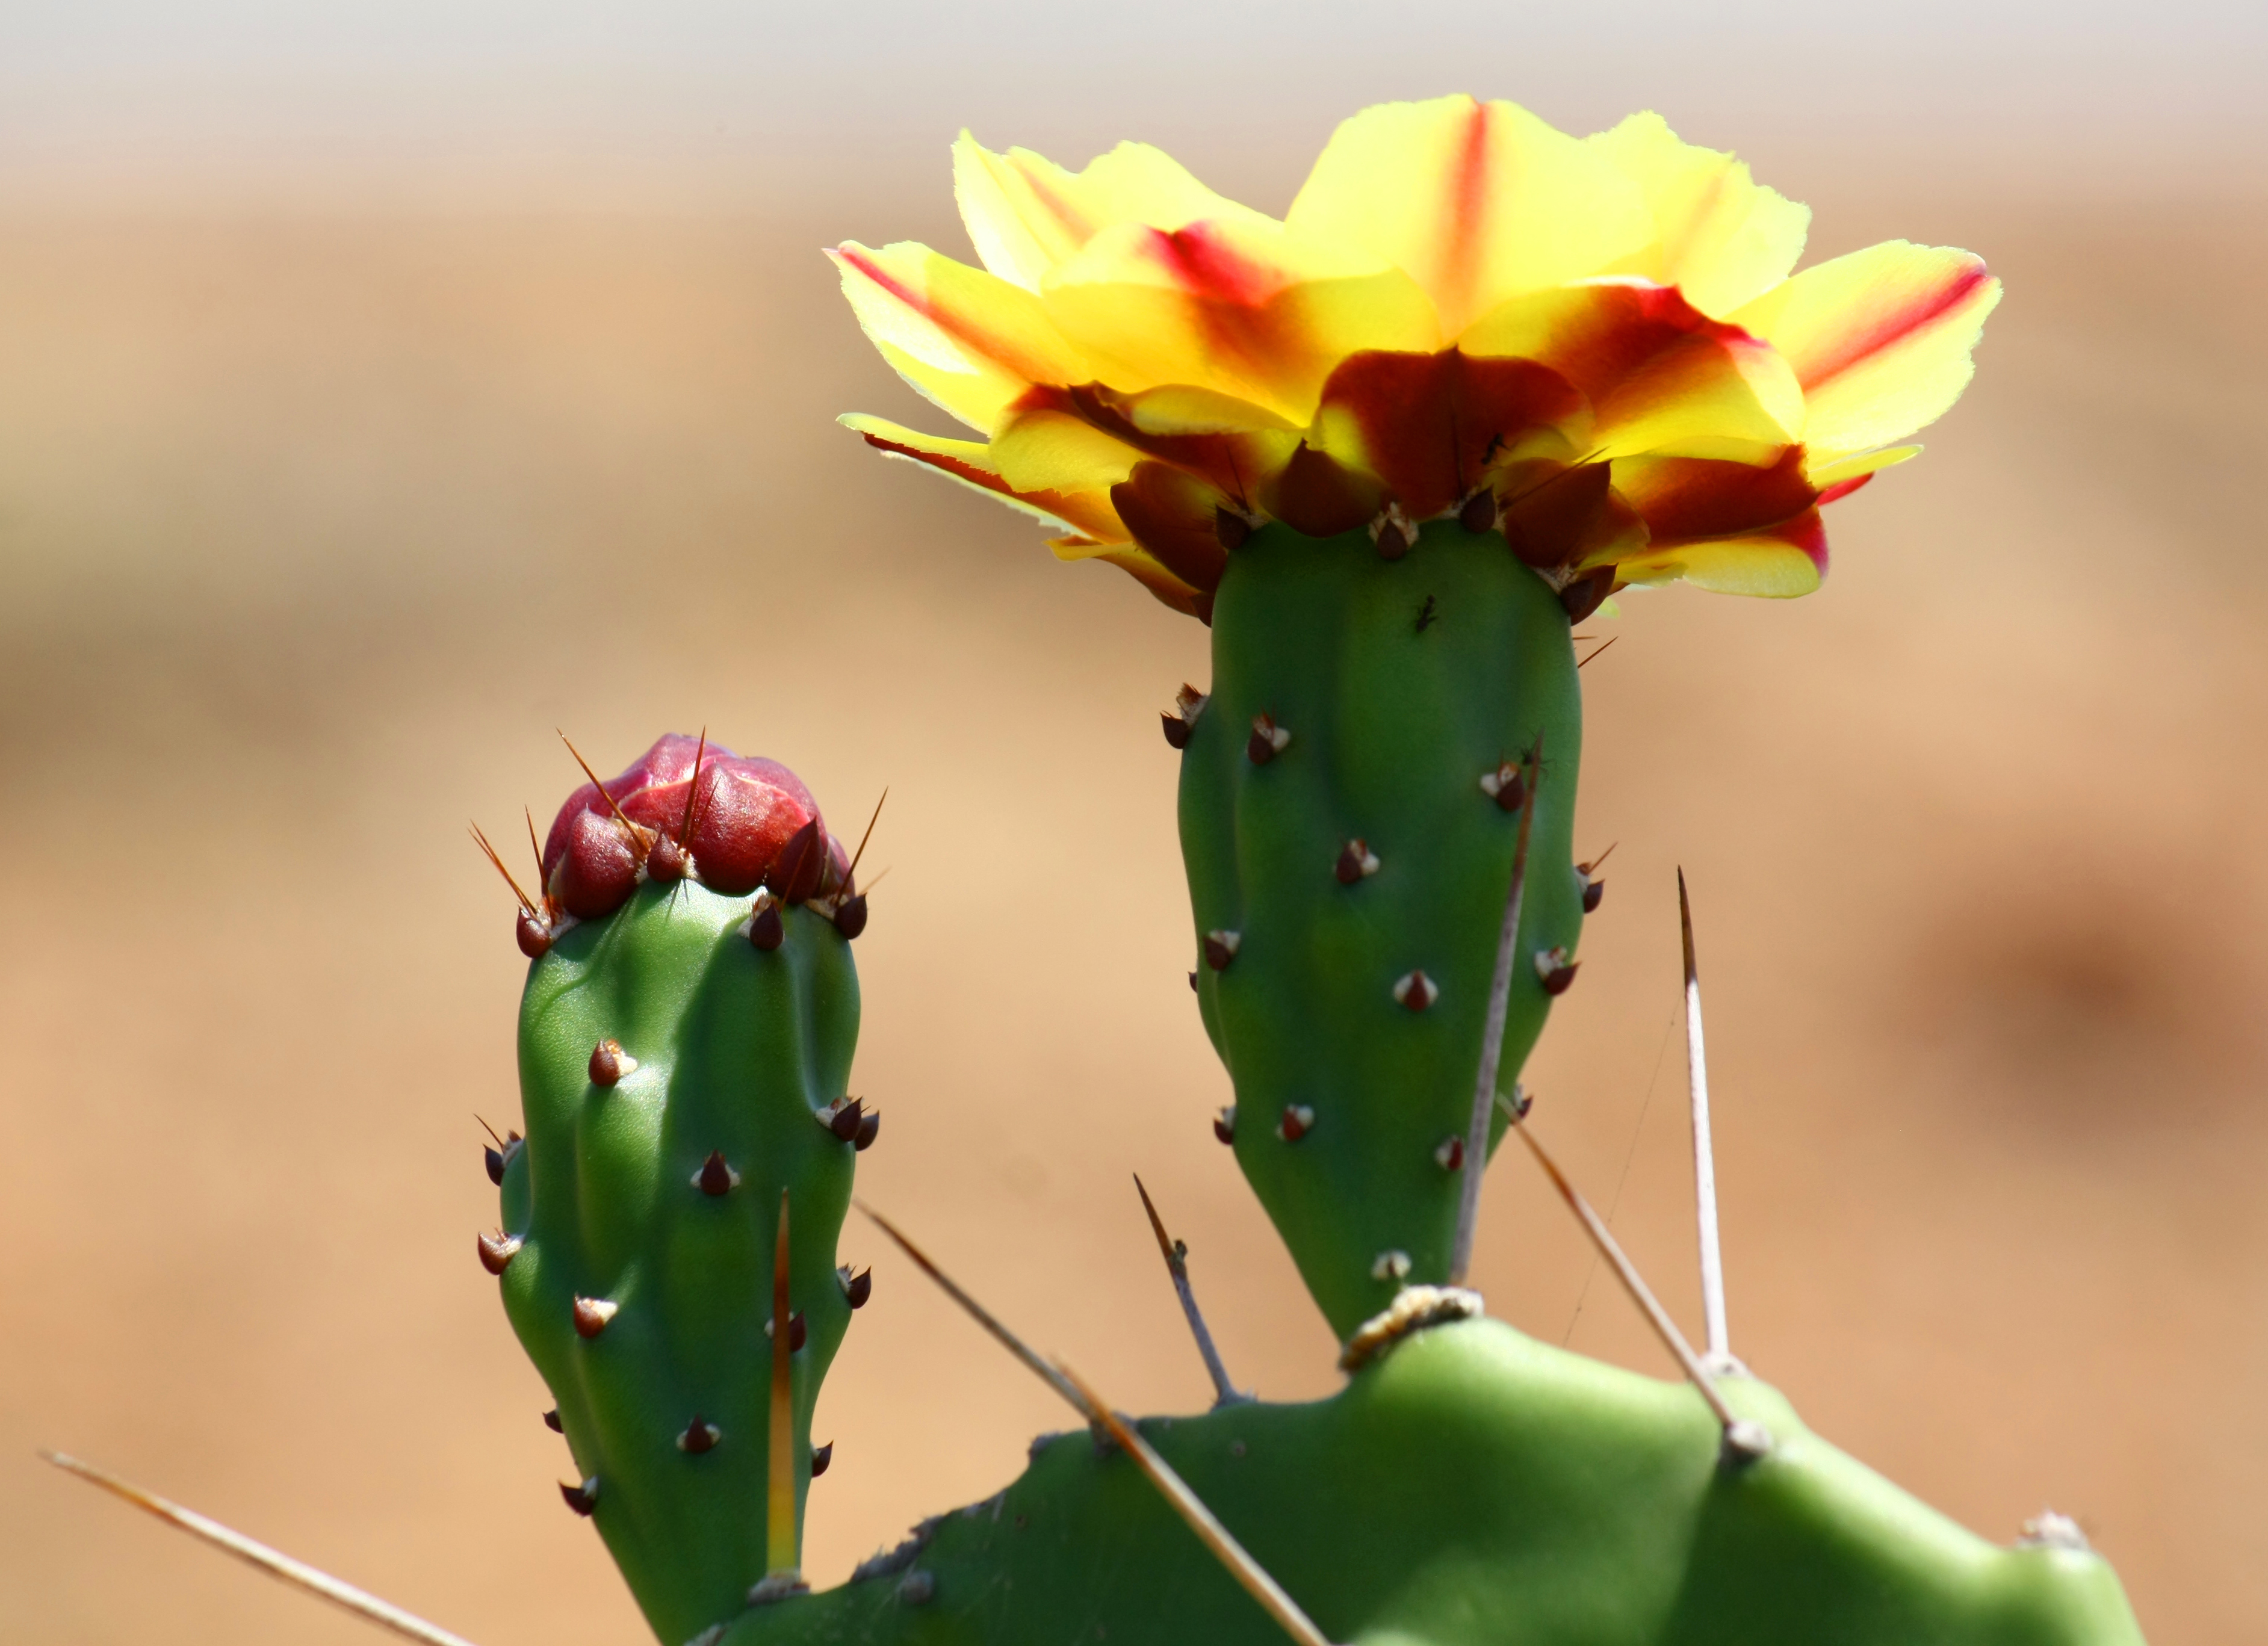 Cactus (Opuntia phaeacantha) flower